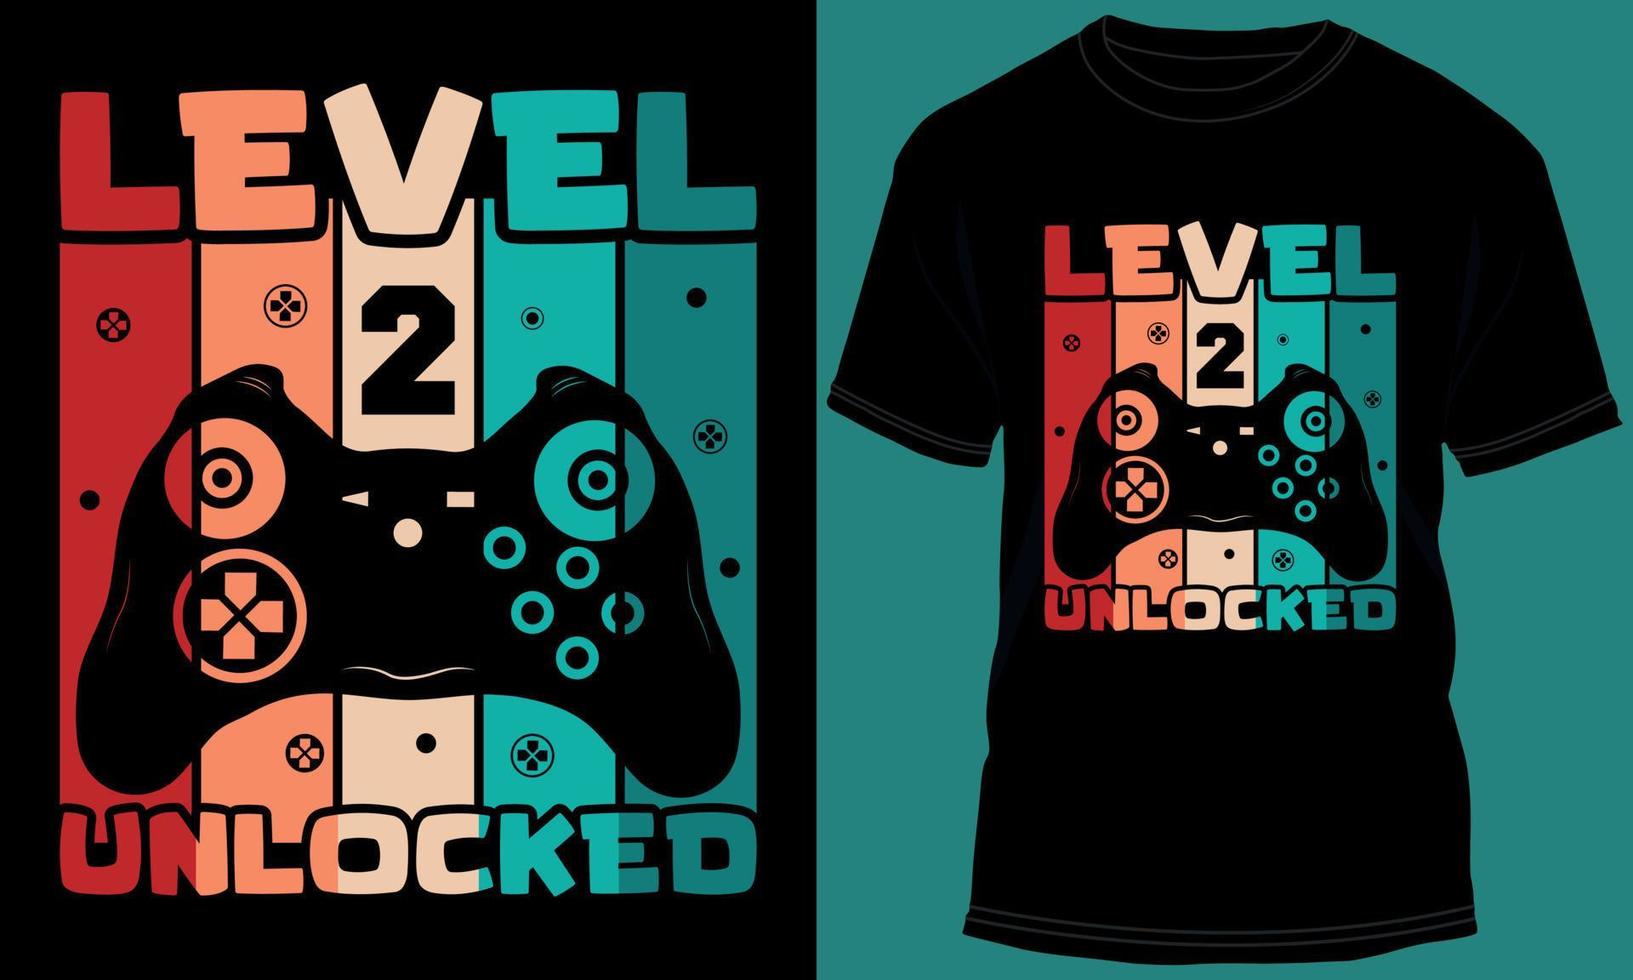 jugador o juego de azar nivel 2 desbloqueado camiseta diseño vector